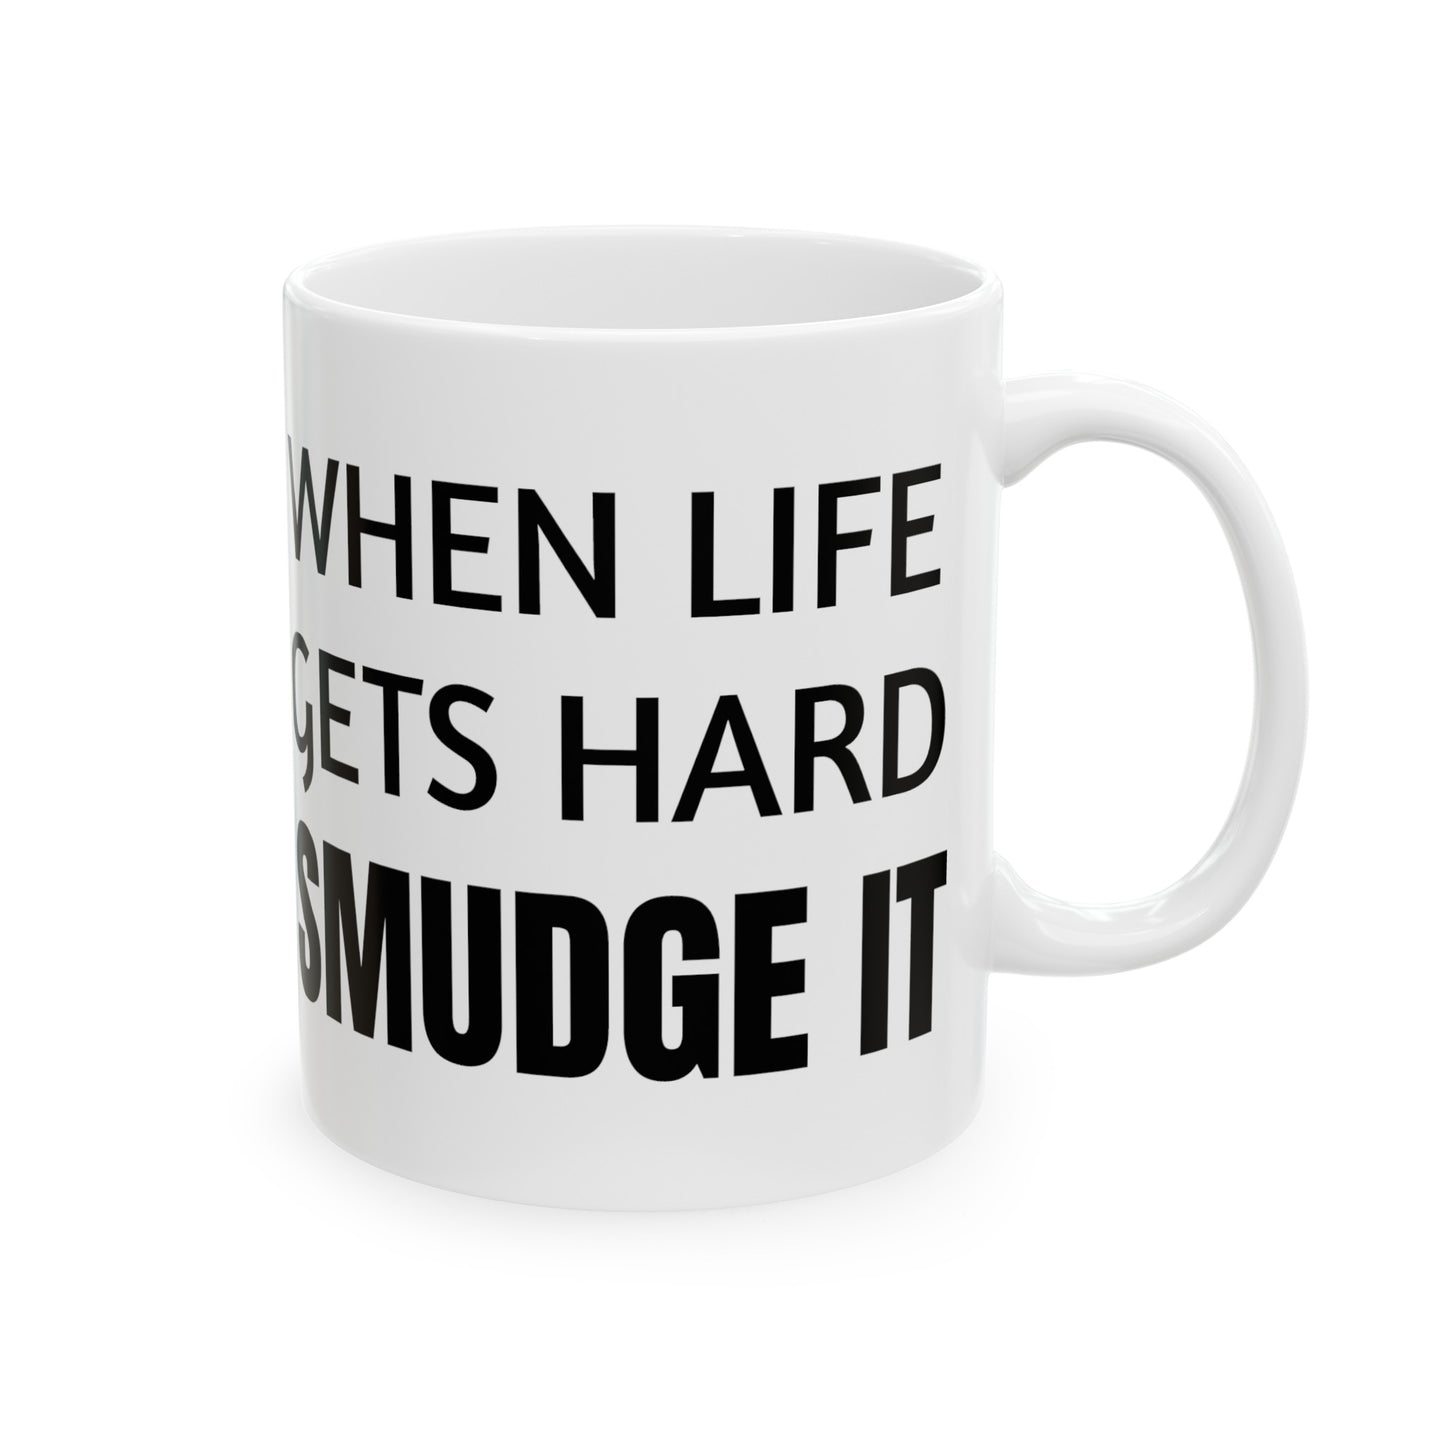 When Life Gets Hard Smudge It Ceramic Mug 11oz